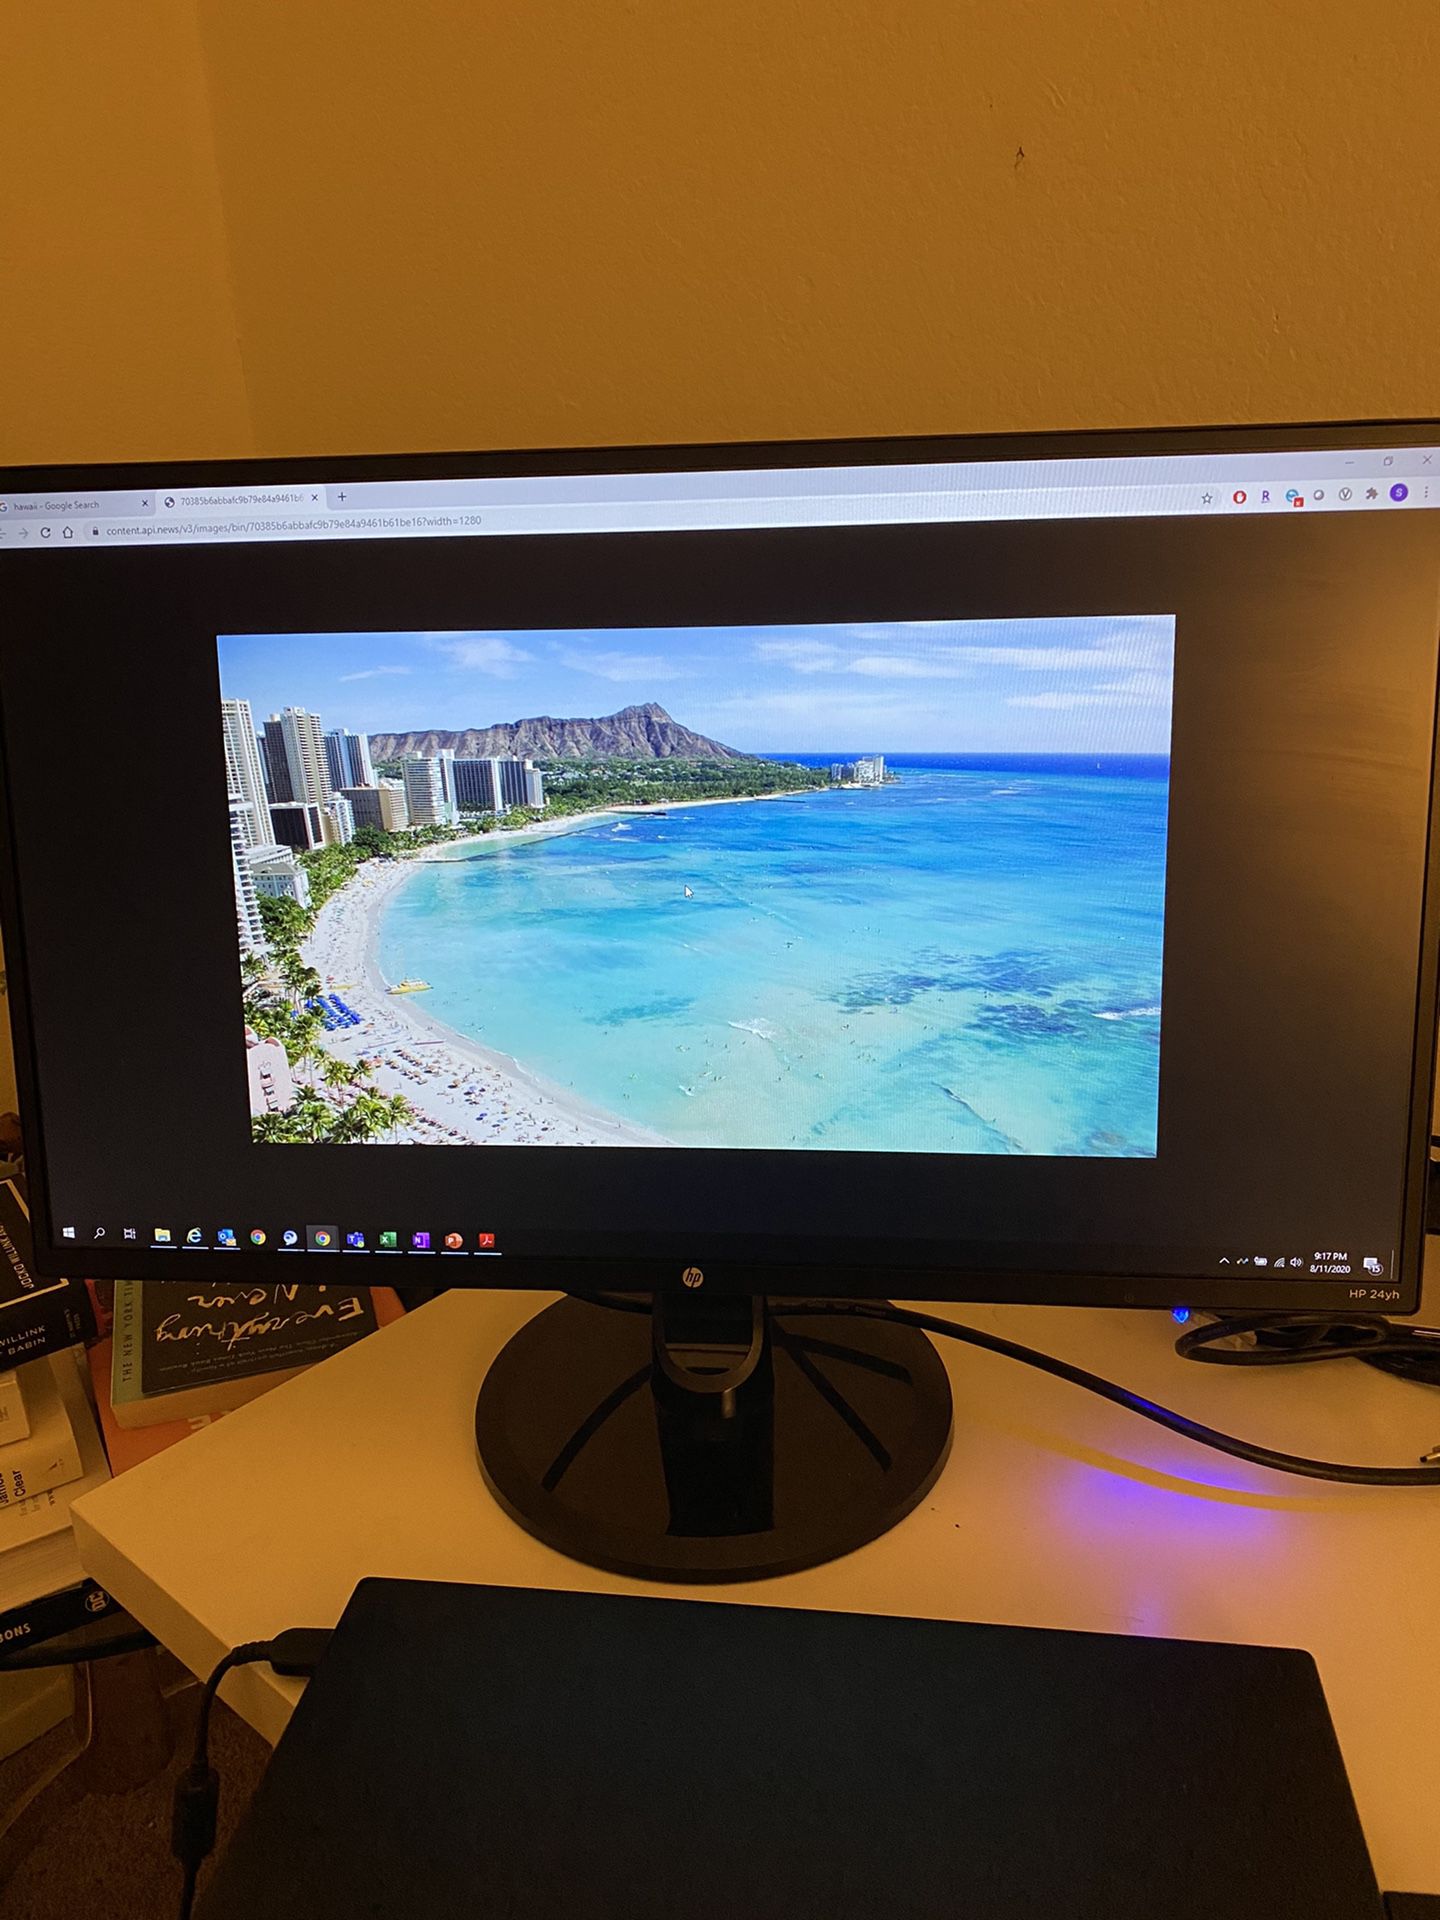 HP 24yh display 24” monitor